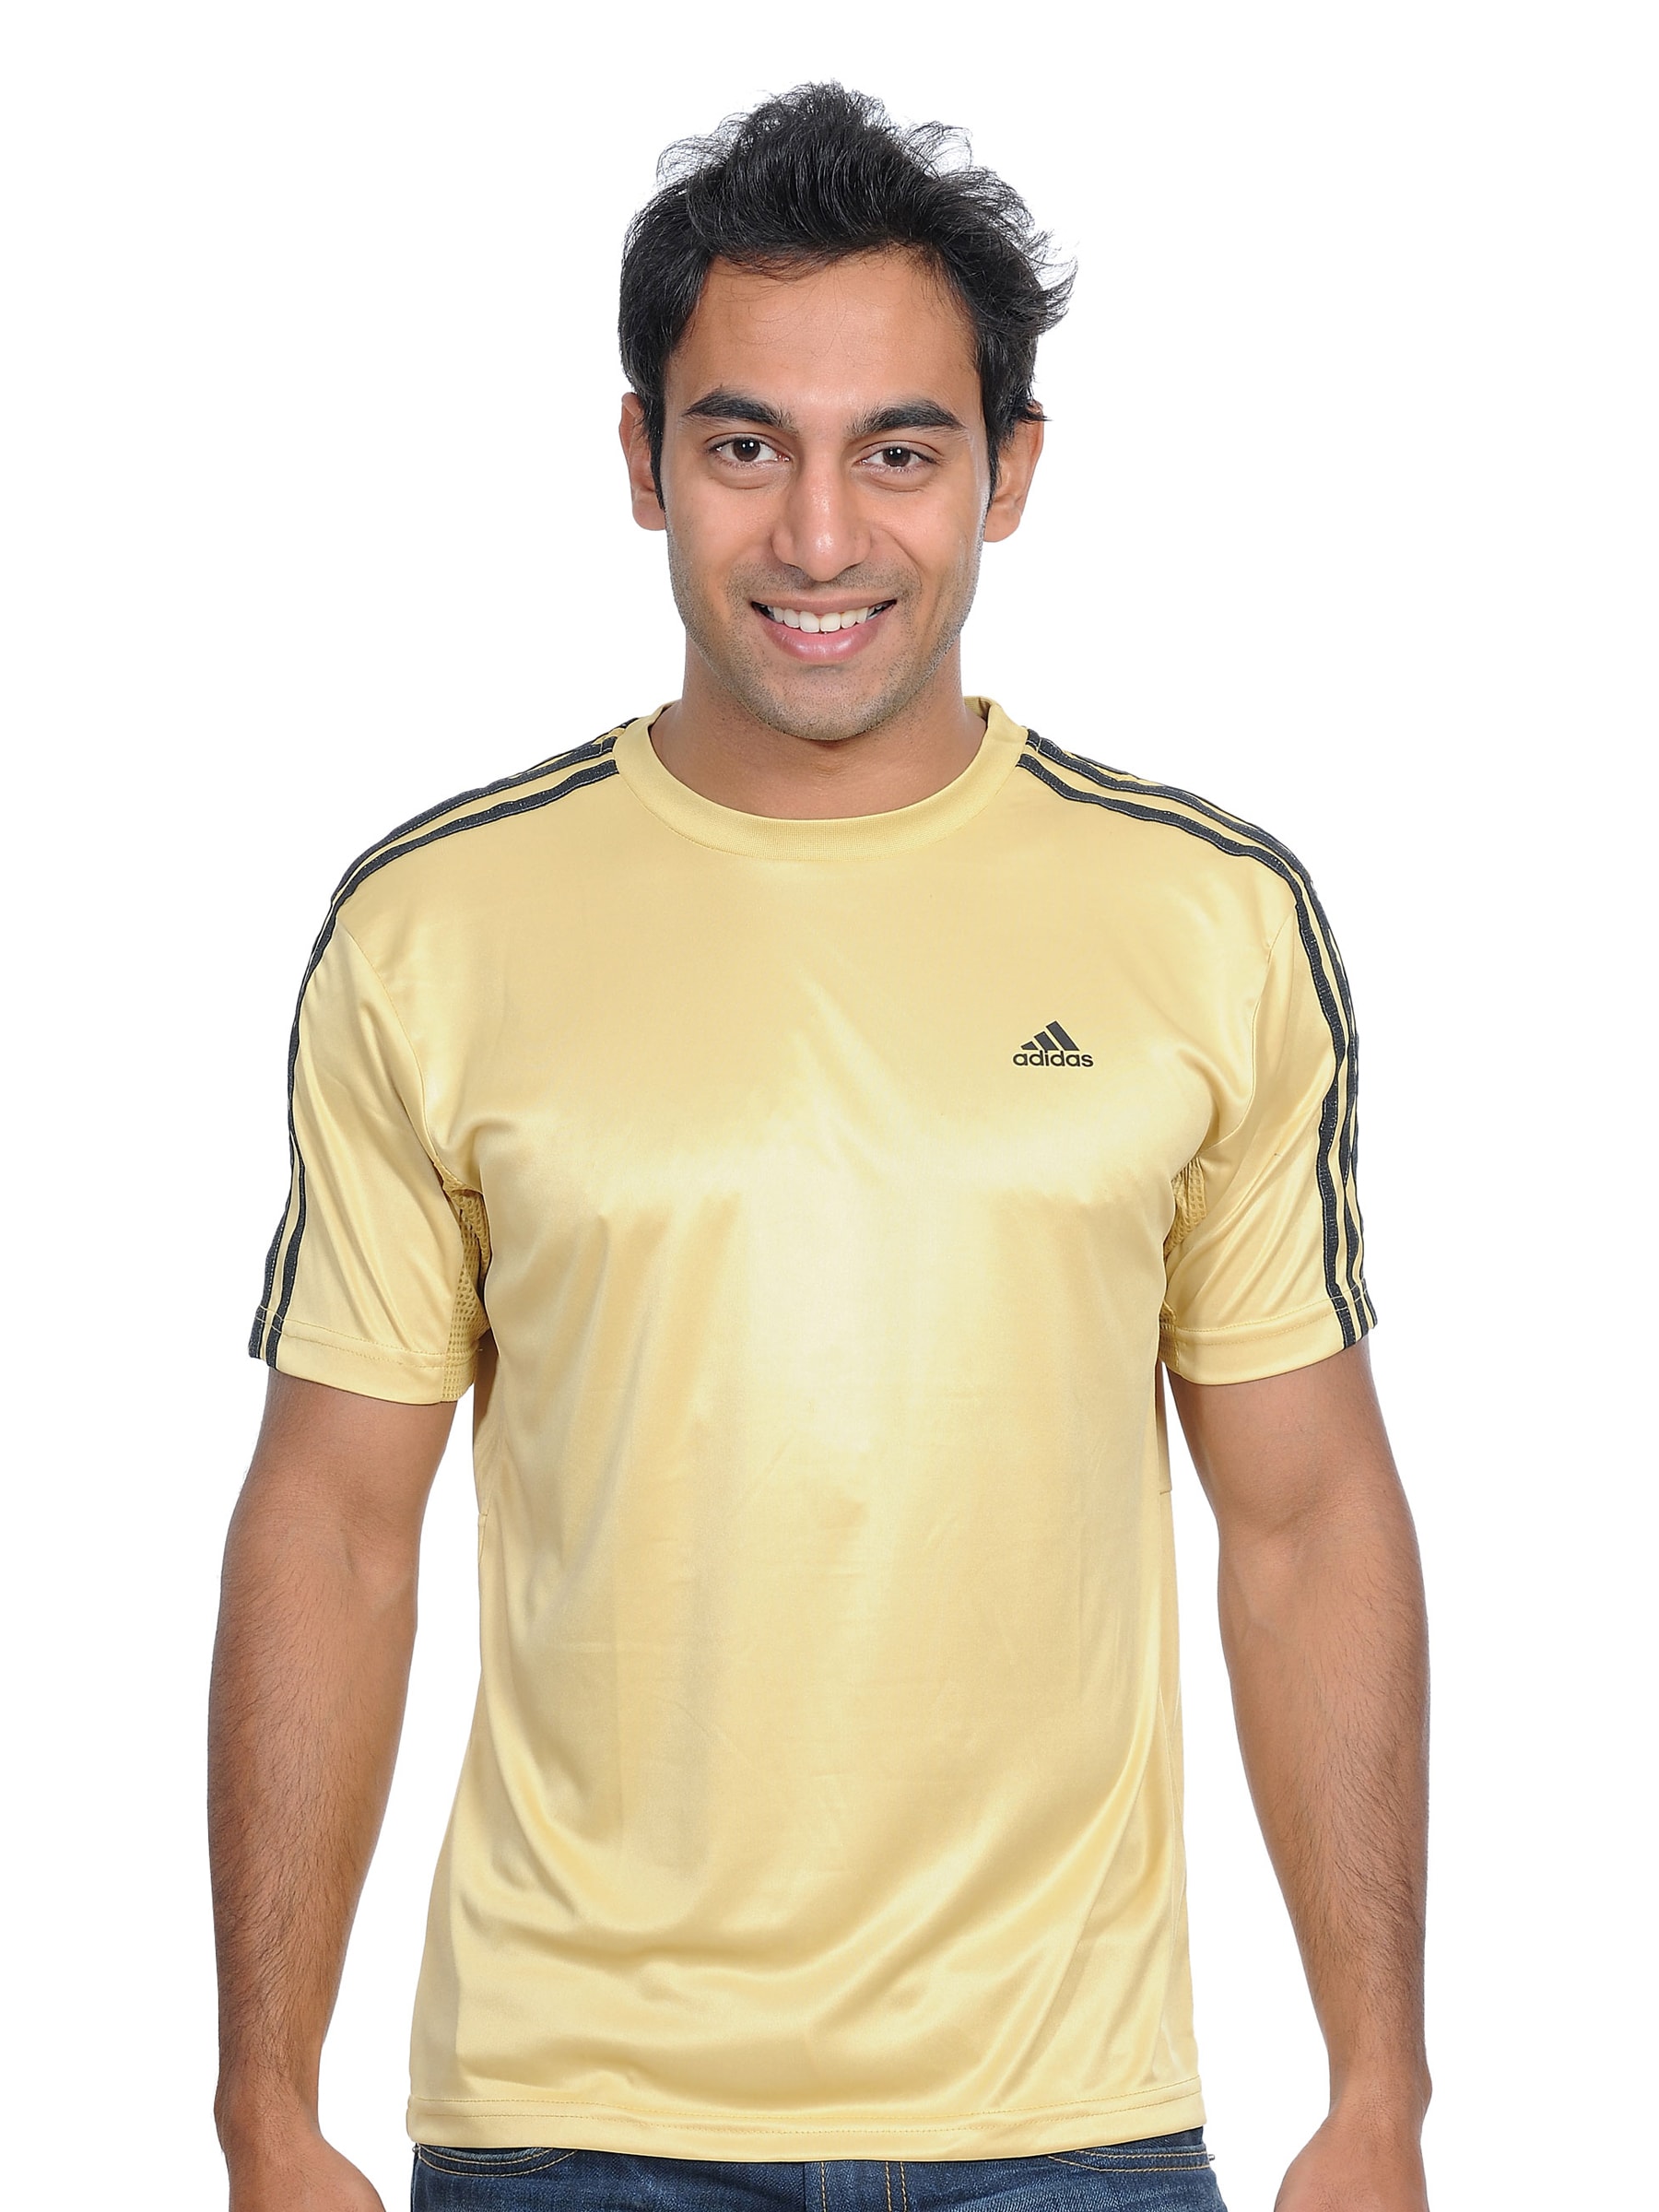 ADIDAS Mens Light Yellow T-shirt